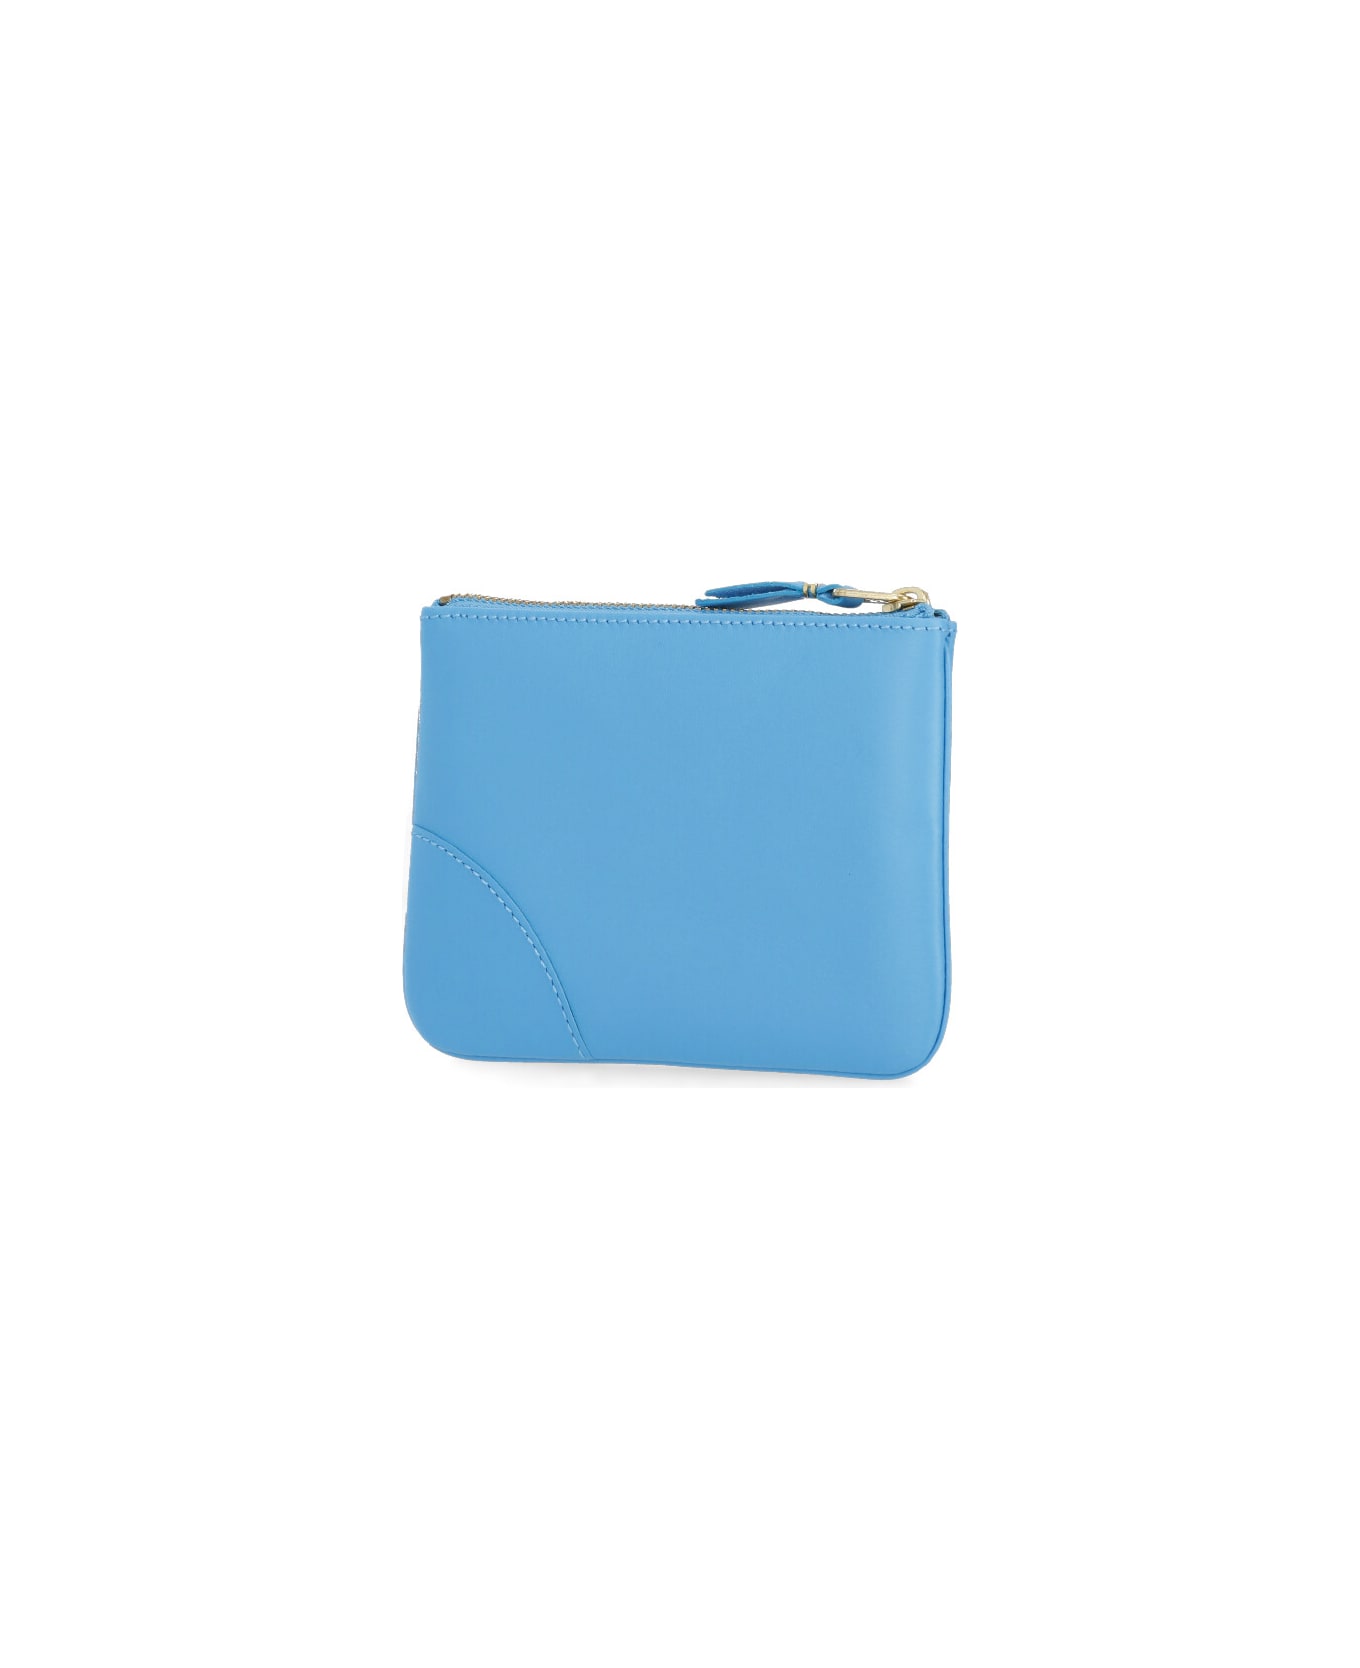 Comme des Garçons Wallet Wallet With Logo - Light Blue